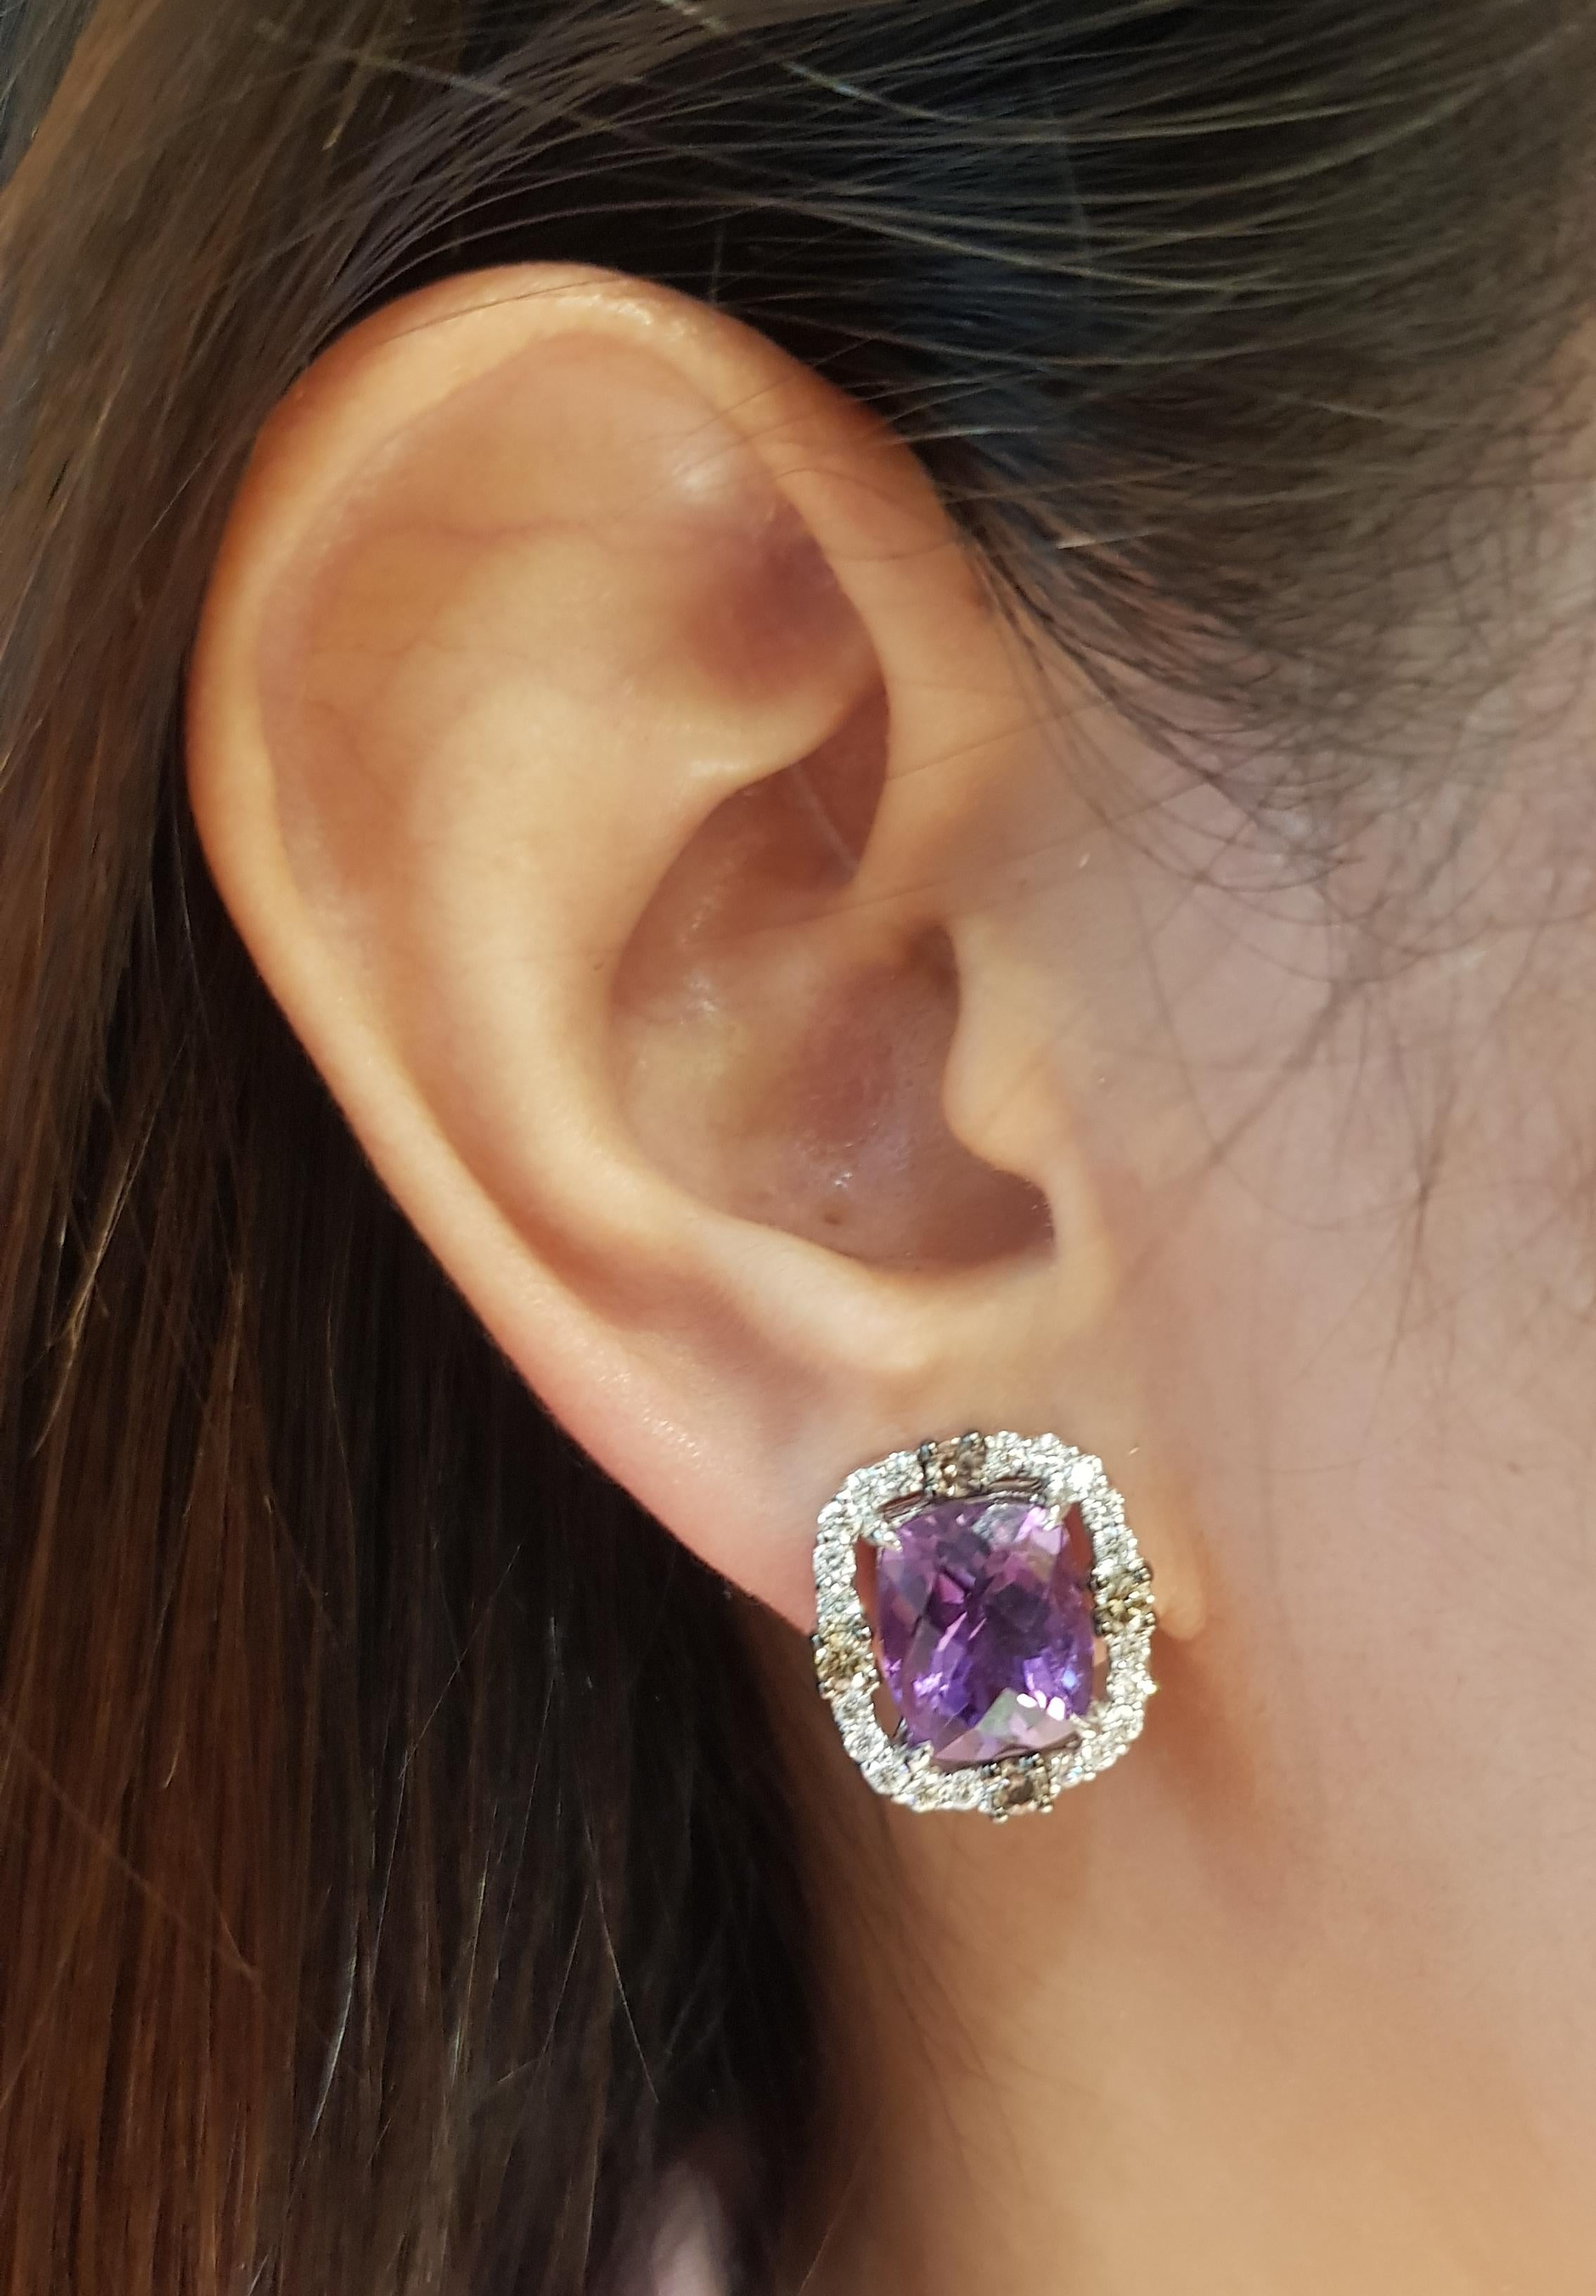 Amethyst 8.31 carats, Brown Diamond 0.47 carat and Diamond 0.68 carat Earrings set in 18 Karat White Gold Settings

Width:   1.4 cm 
Length:  1.5 cm
Total Weight: 9.86 grams

